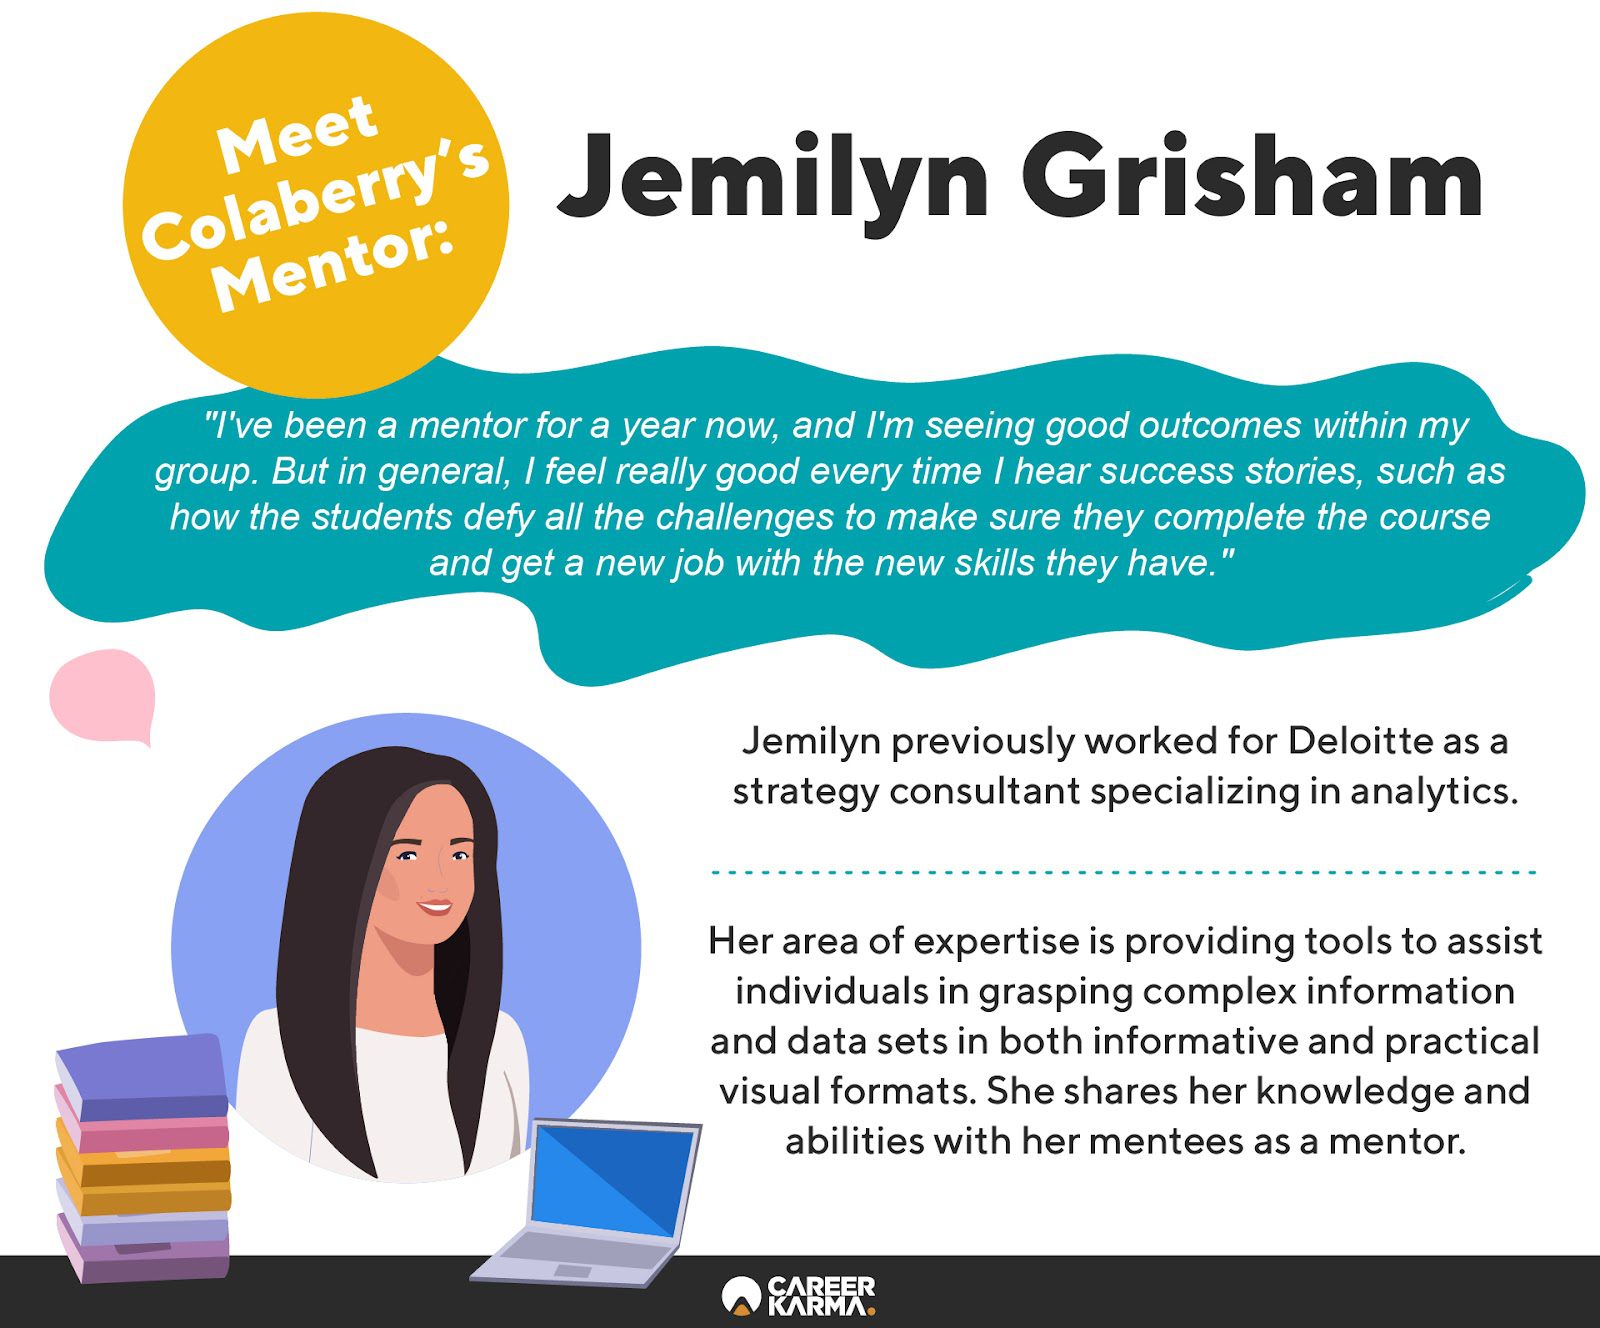 An infographic spotlighting Colaberry mentor Jemilyn Grisham